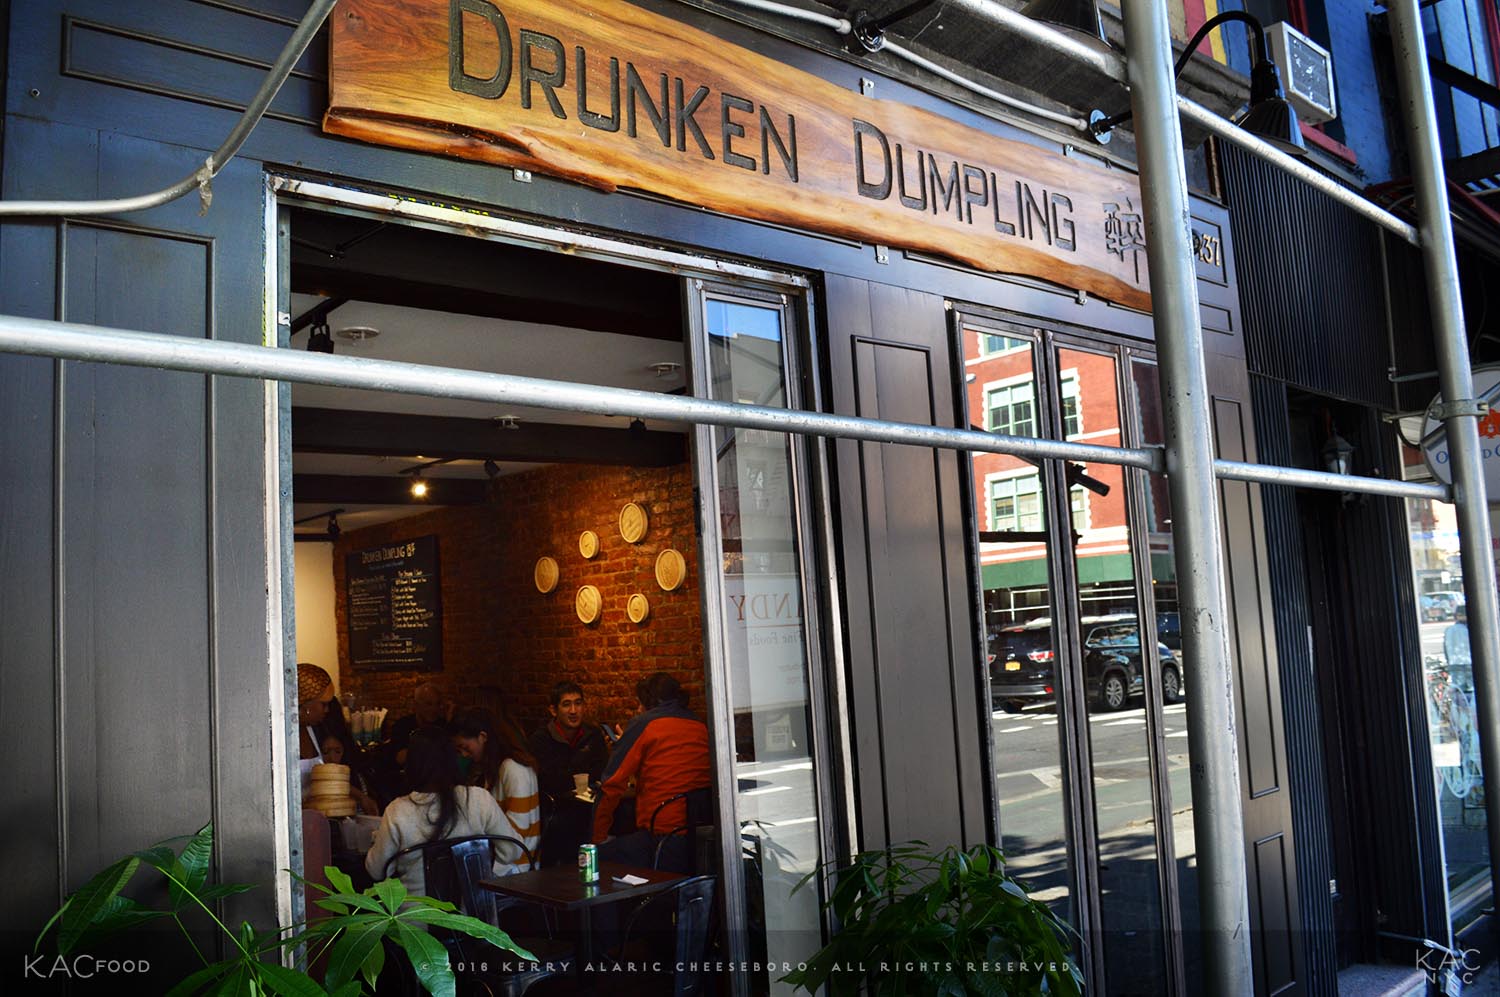 kac_food-161016-drunken-dumpling-exterior-1-1500.jpg